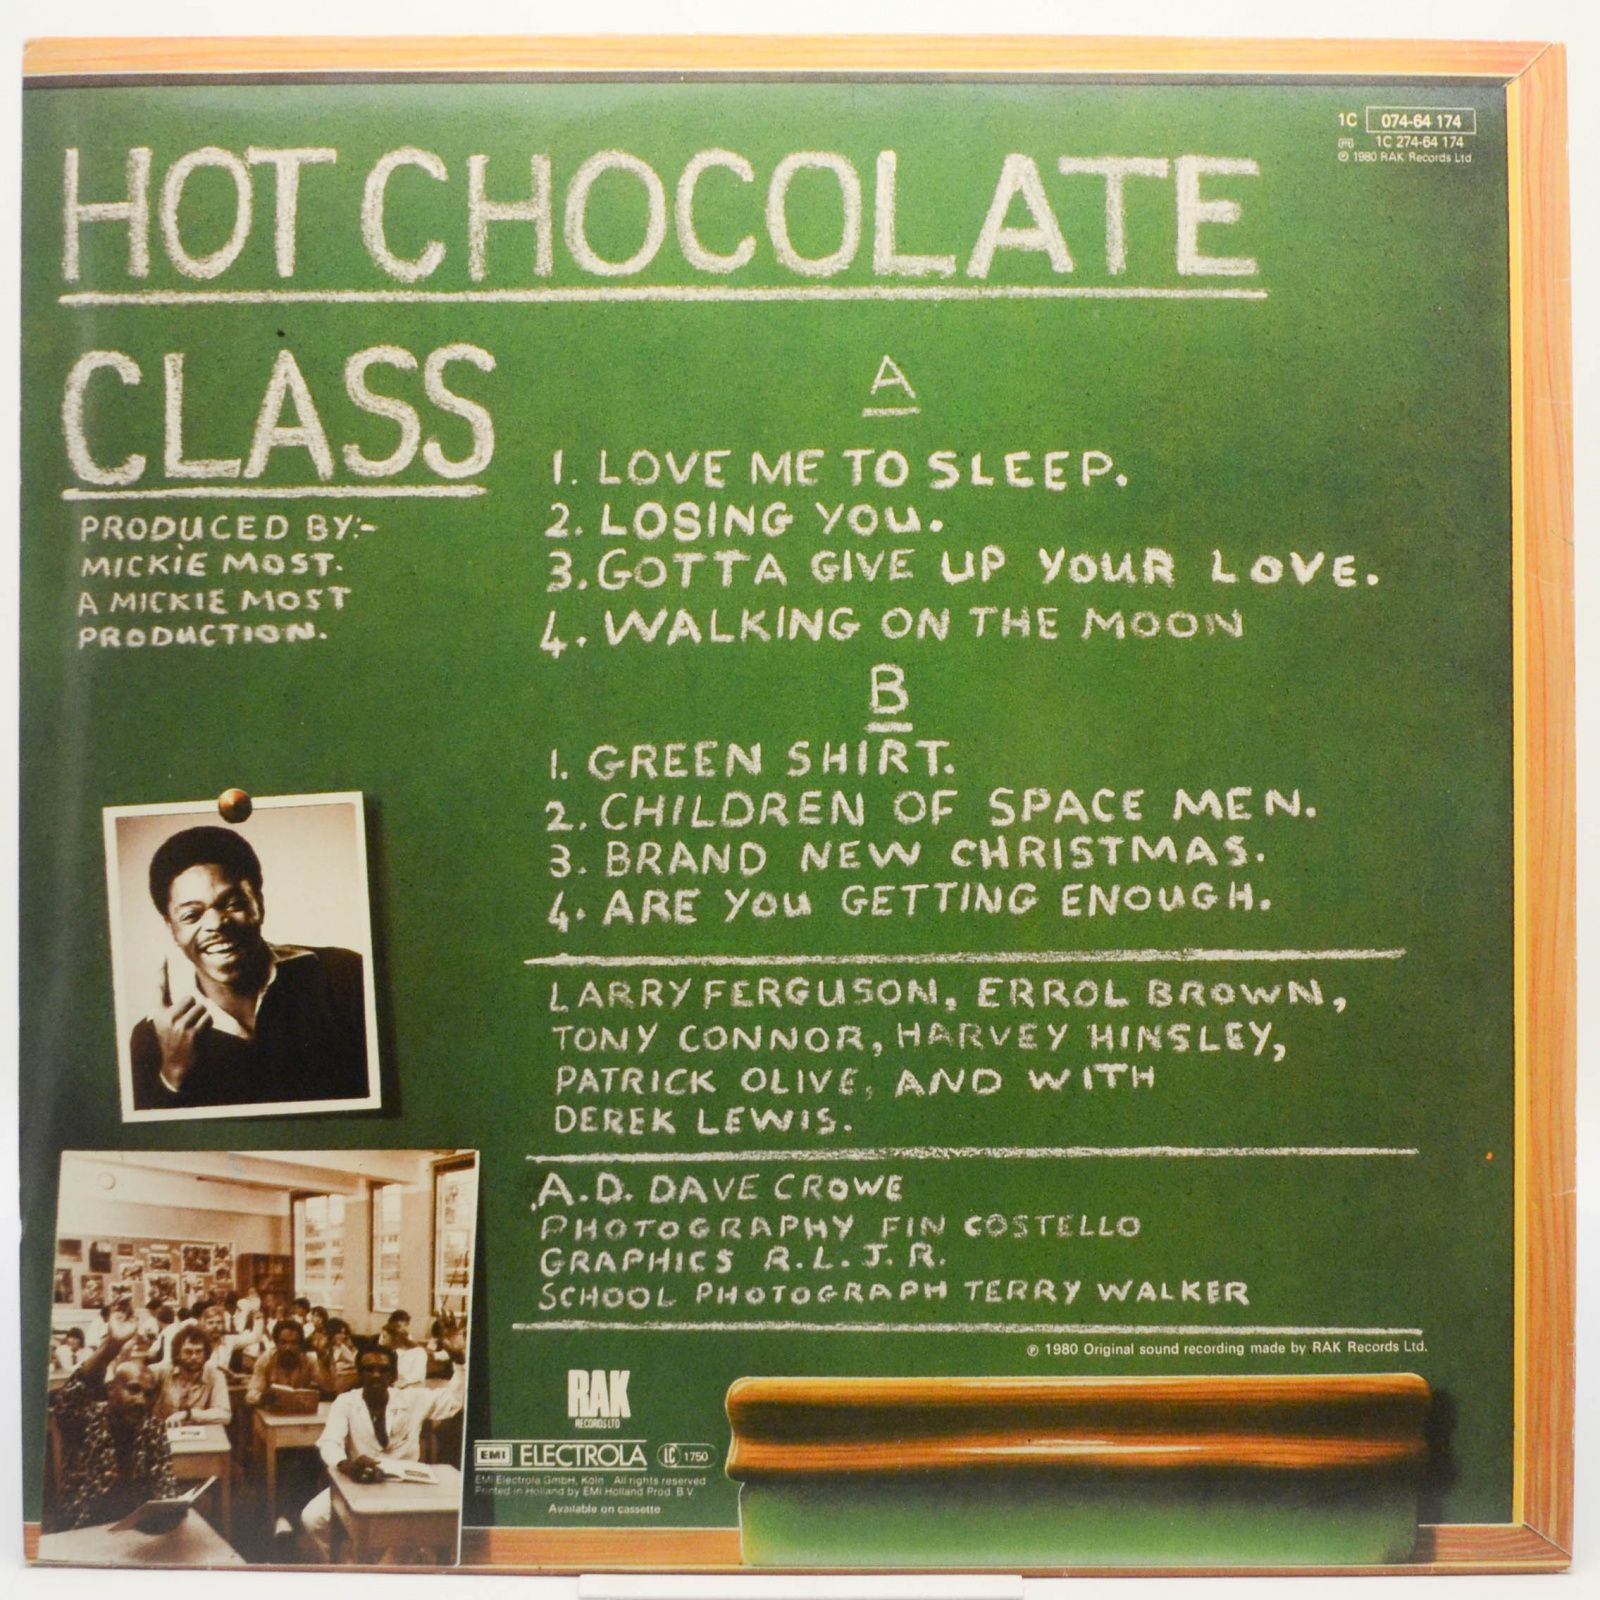 Hot Chocolate — Class, 1980